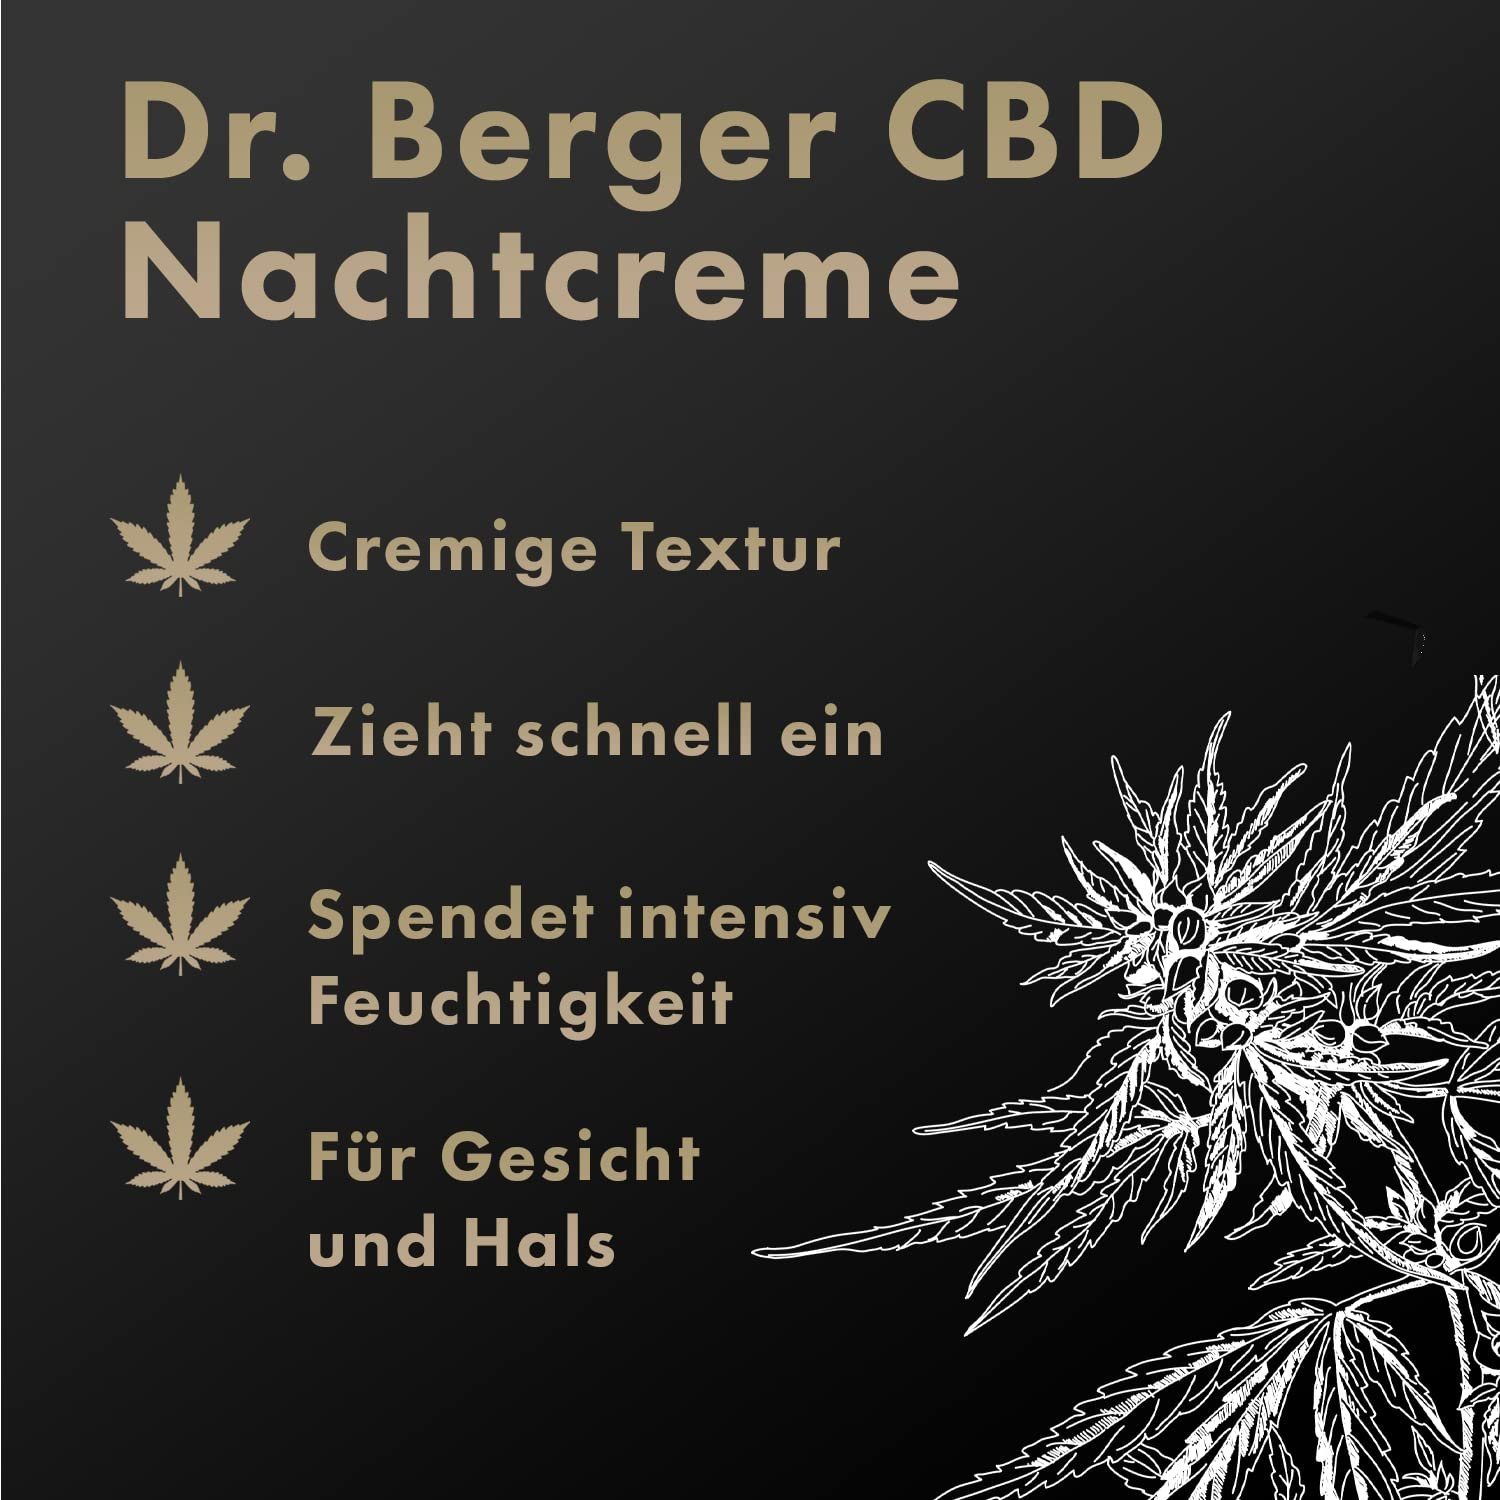 Nachtcreme mit Cell, "Black Nachtcreme 50 ml Dr. mg Berger CBD mit 500 Edition" Moos